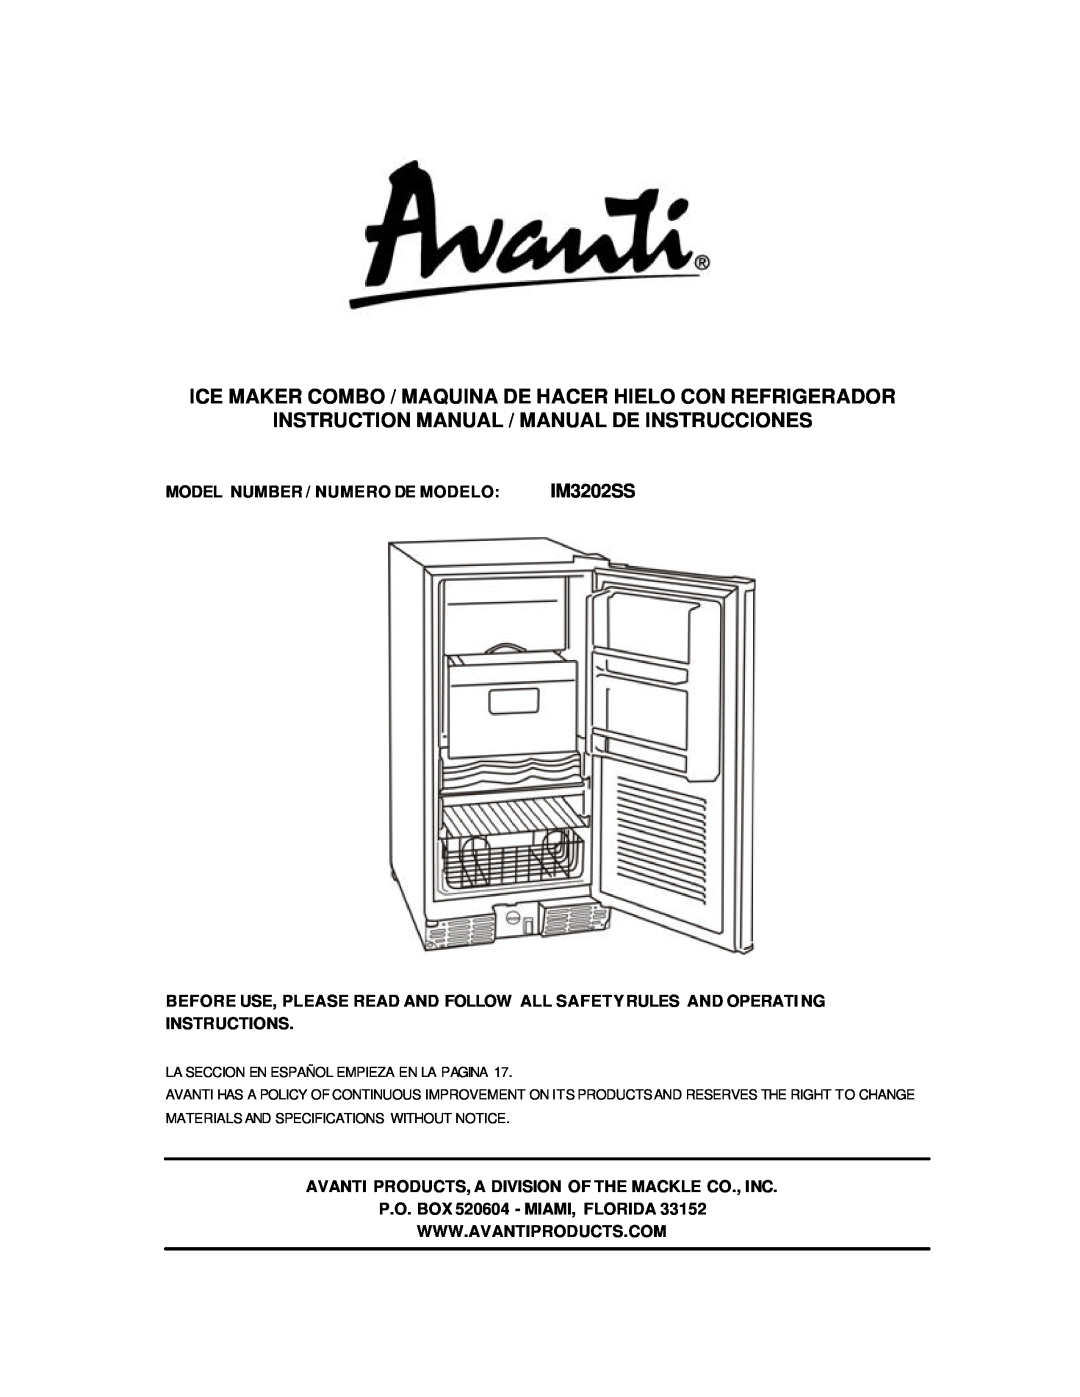 Avanti IM320299 instruction manual Instruction Manual / Manual De Instrucciones, Model Number / Numero De Modelo, IM3202SS 